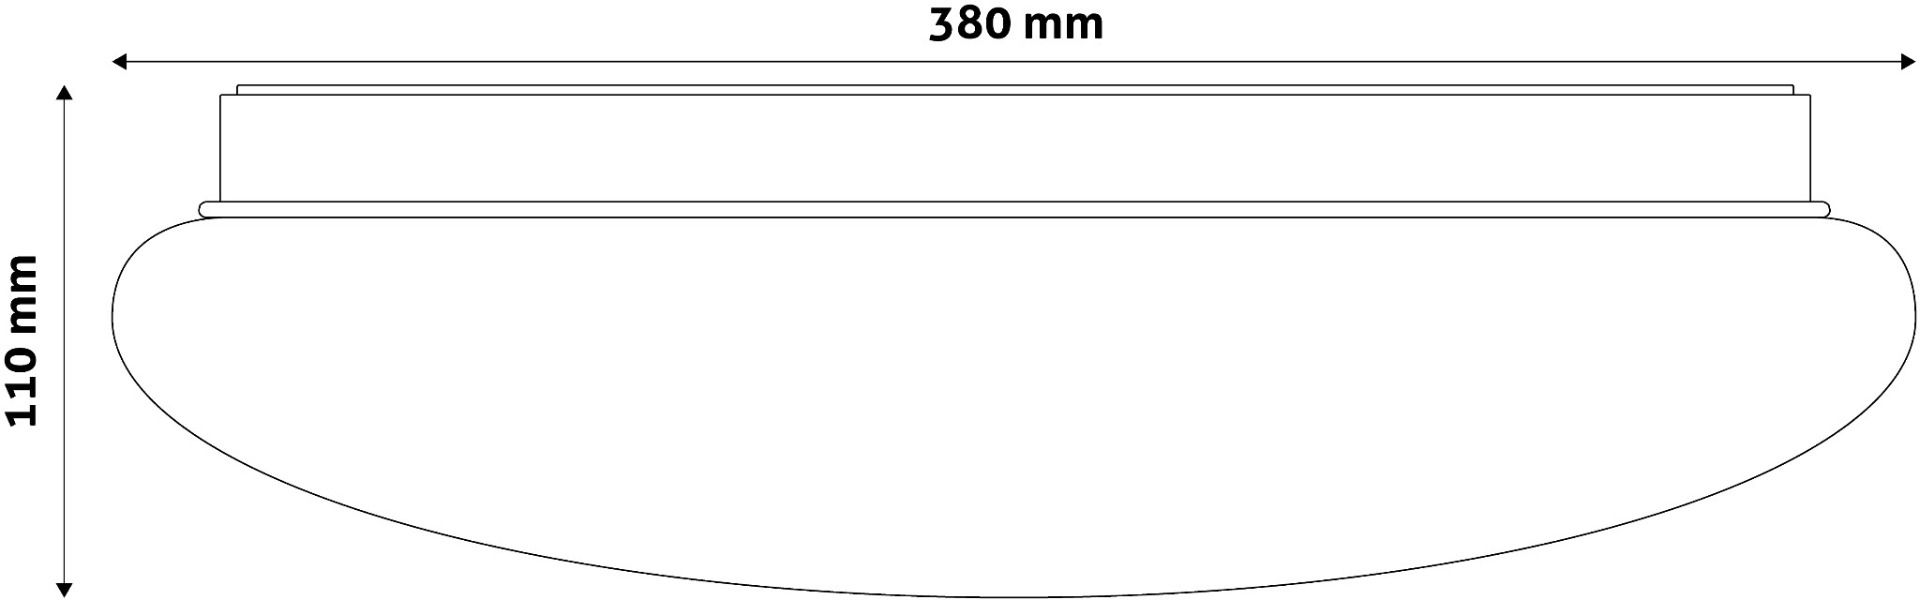 Avide LED Μοντέρνα Πλαφονιέρα Οροφής Stella (Starry) 24W 380*110.0μm Λευκό 4000K